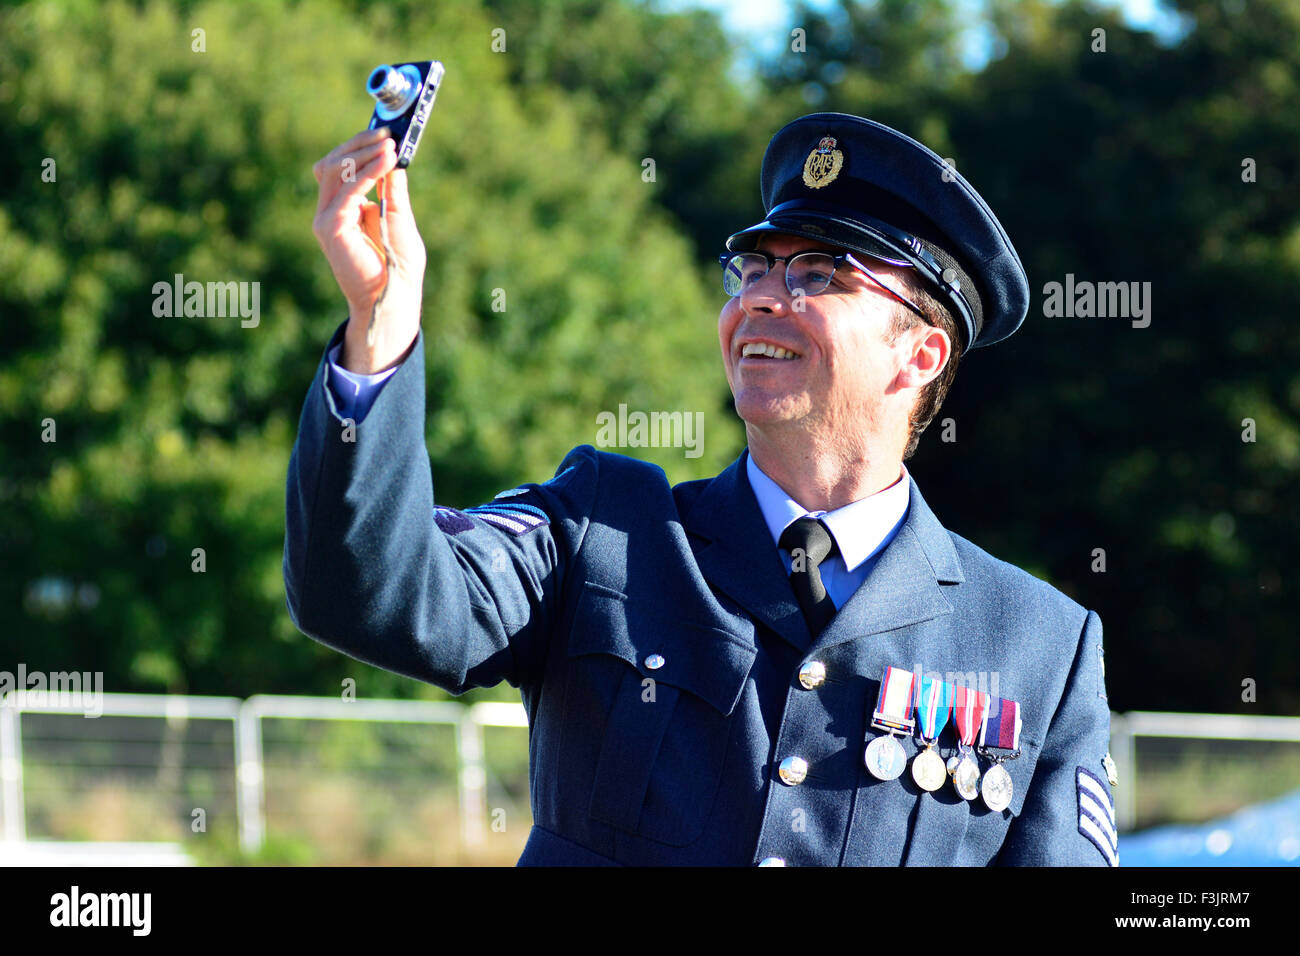 Flug-Sergeant John Evans der RAF Waddington unter einem Snap The International Bomber Command Center Memorial Spire enthüllt am Canwick-Hügel, Lincoln, 2. Oktober 2015. Foto der "Telegraph" von John Robertson. Stockfoto